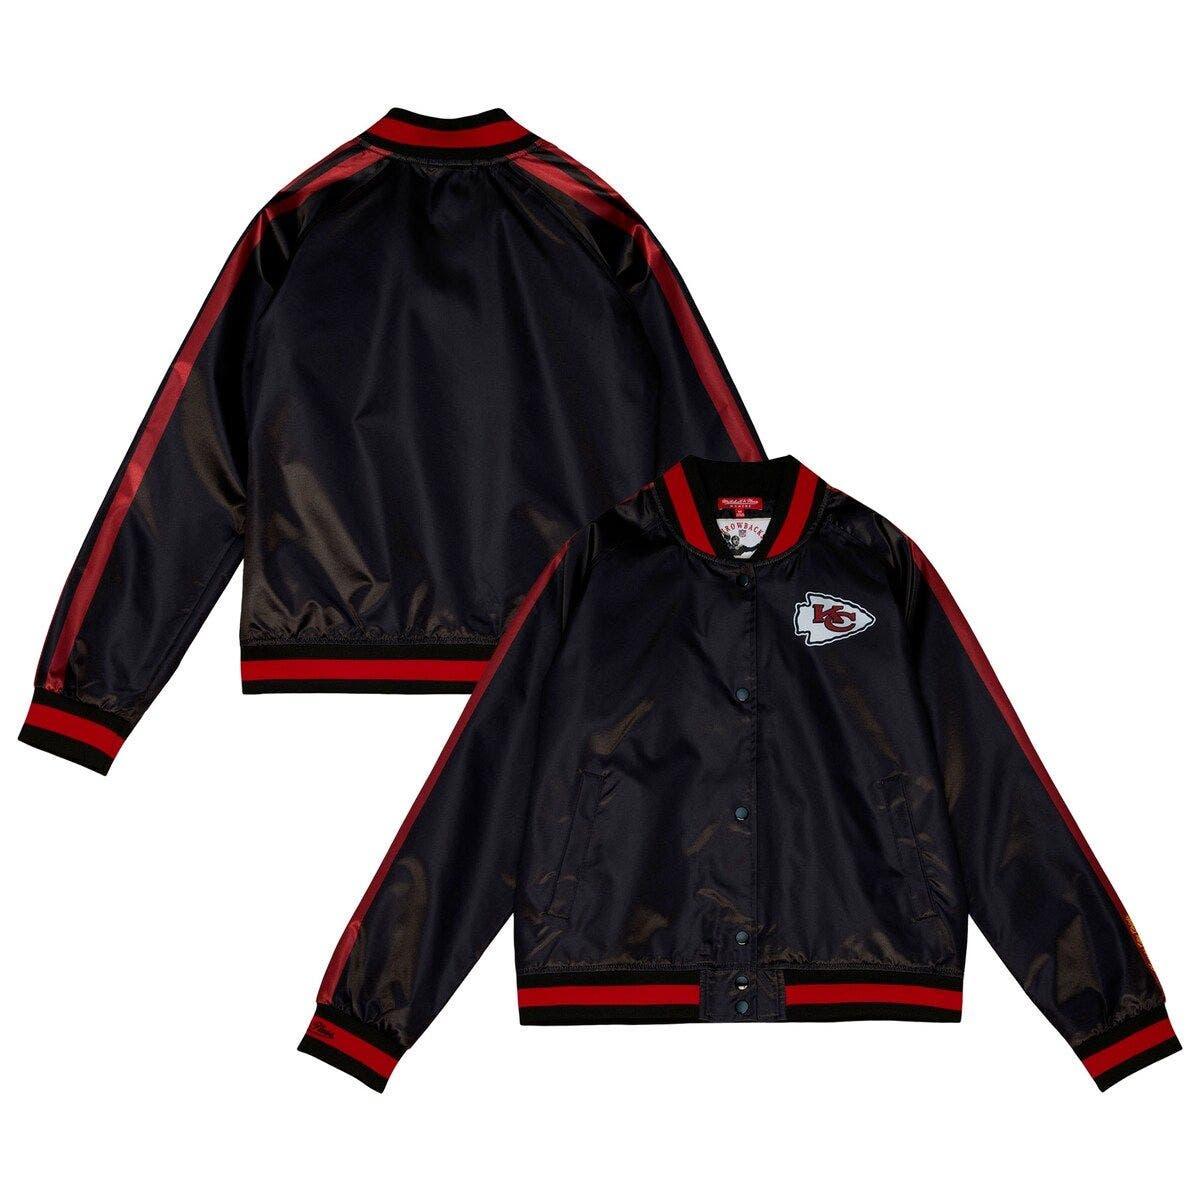 Unisex FENTY for Mitchell & Ness Black Super Bowl LVII Full-Snap Coaches  Jacket